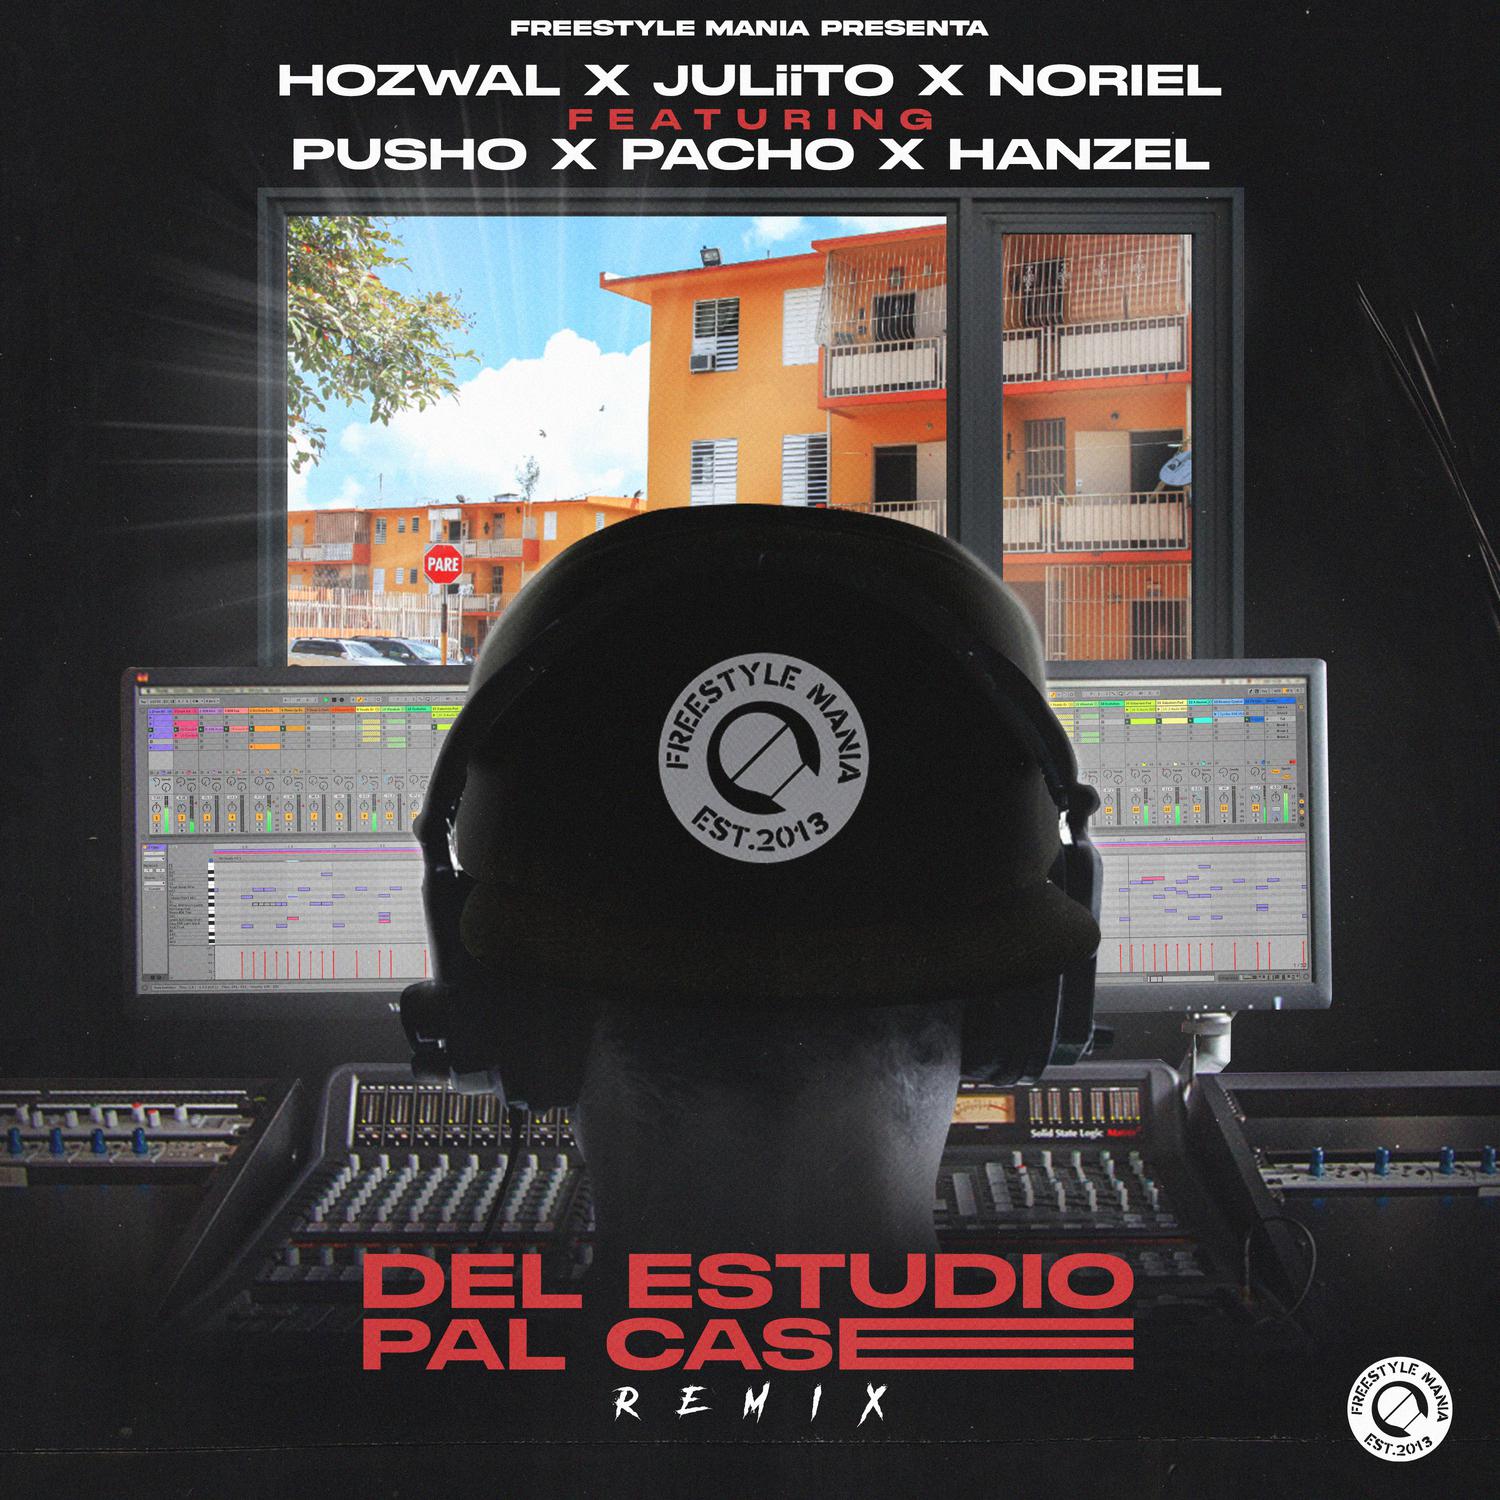 Pusho - Del Estudio Pal Case (Remix)